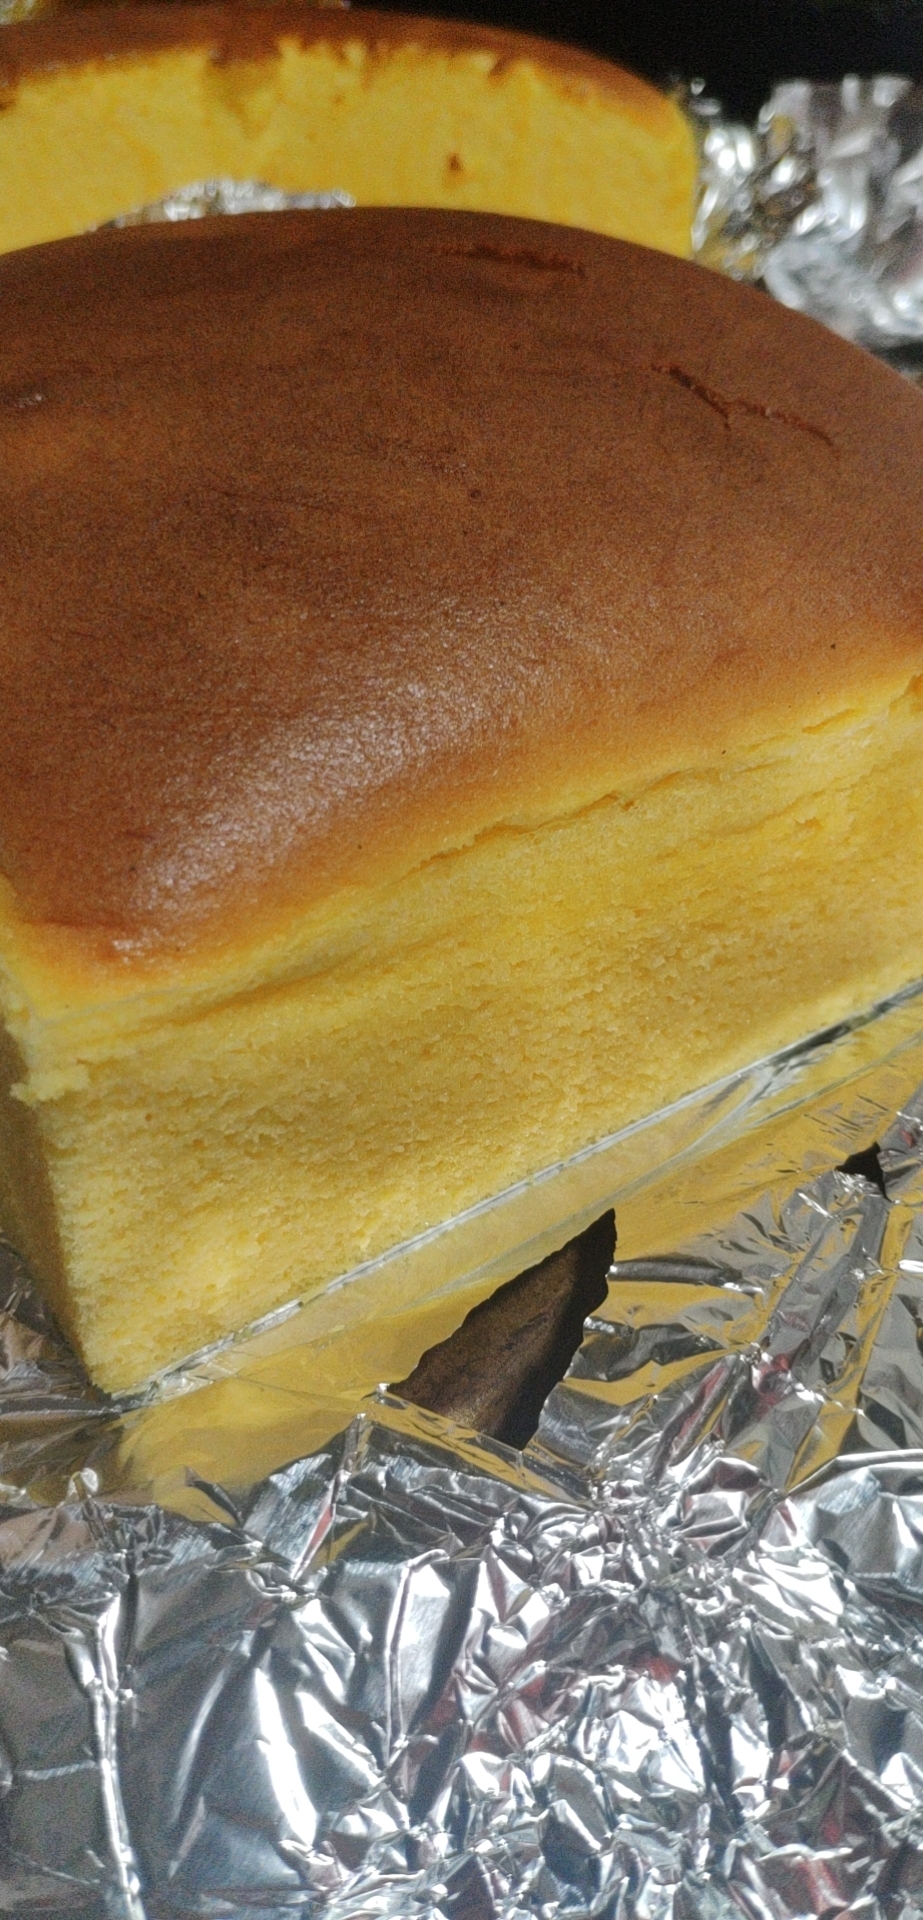 Cheese Cake(轻乳酪蛋糕)8 寸